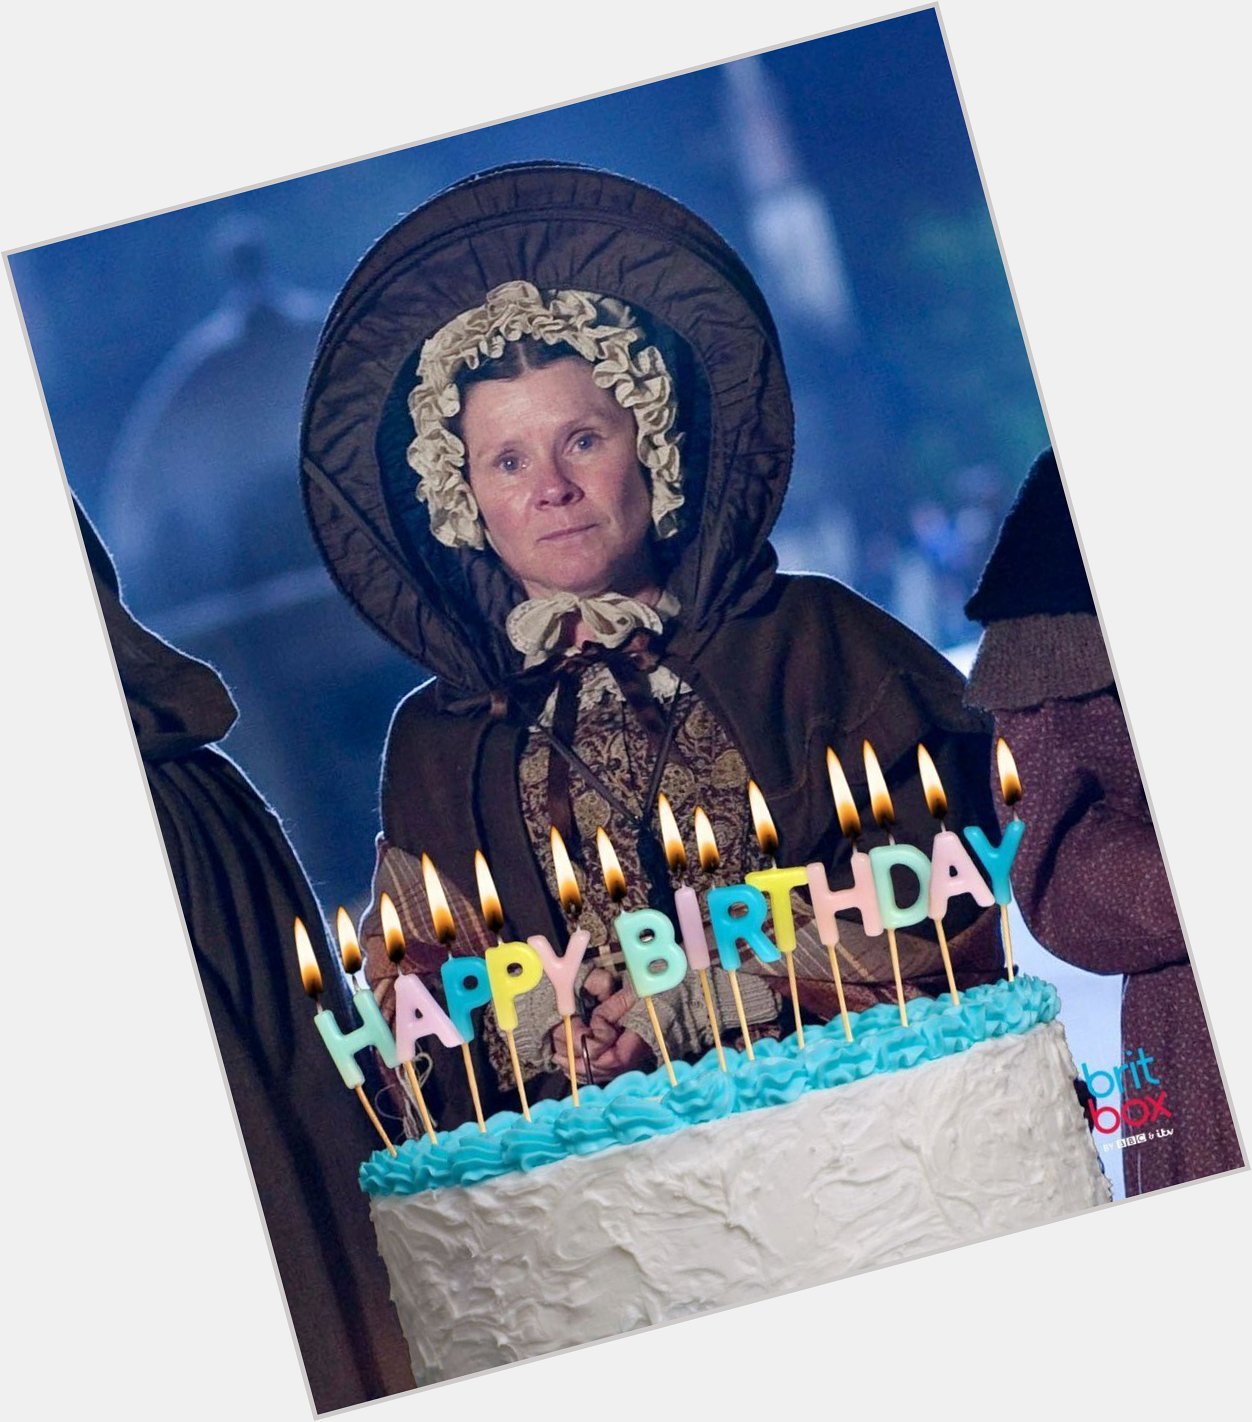 Imelda Staunton, we salute you Happy Birthday! 